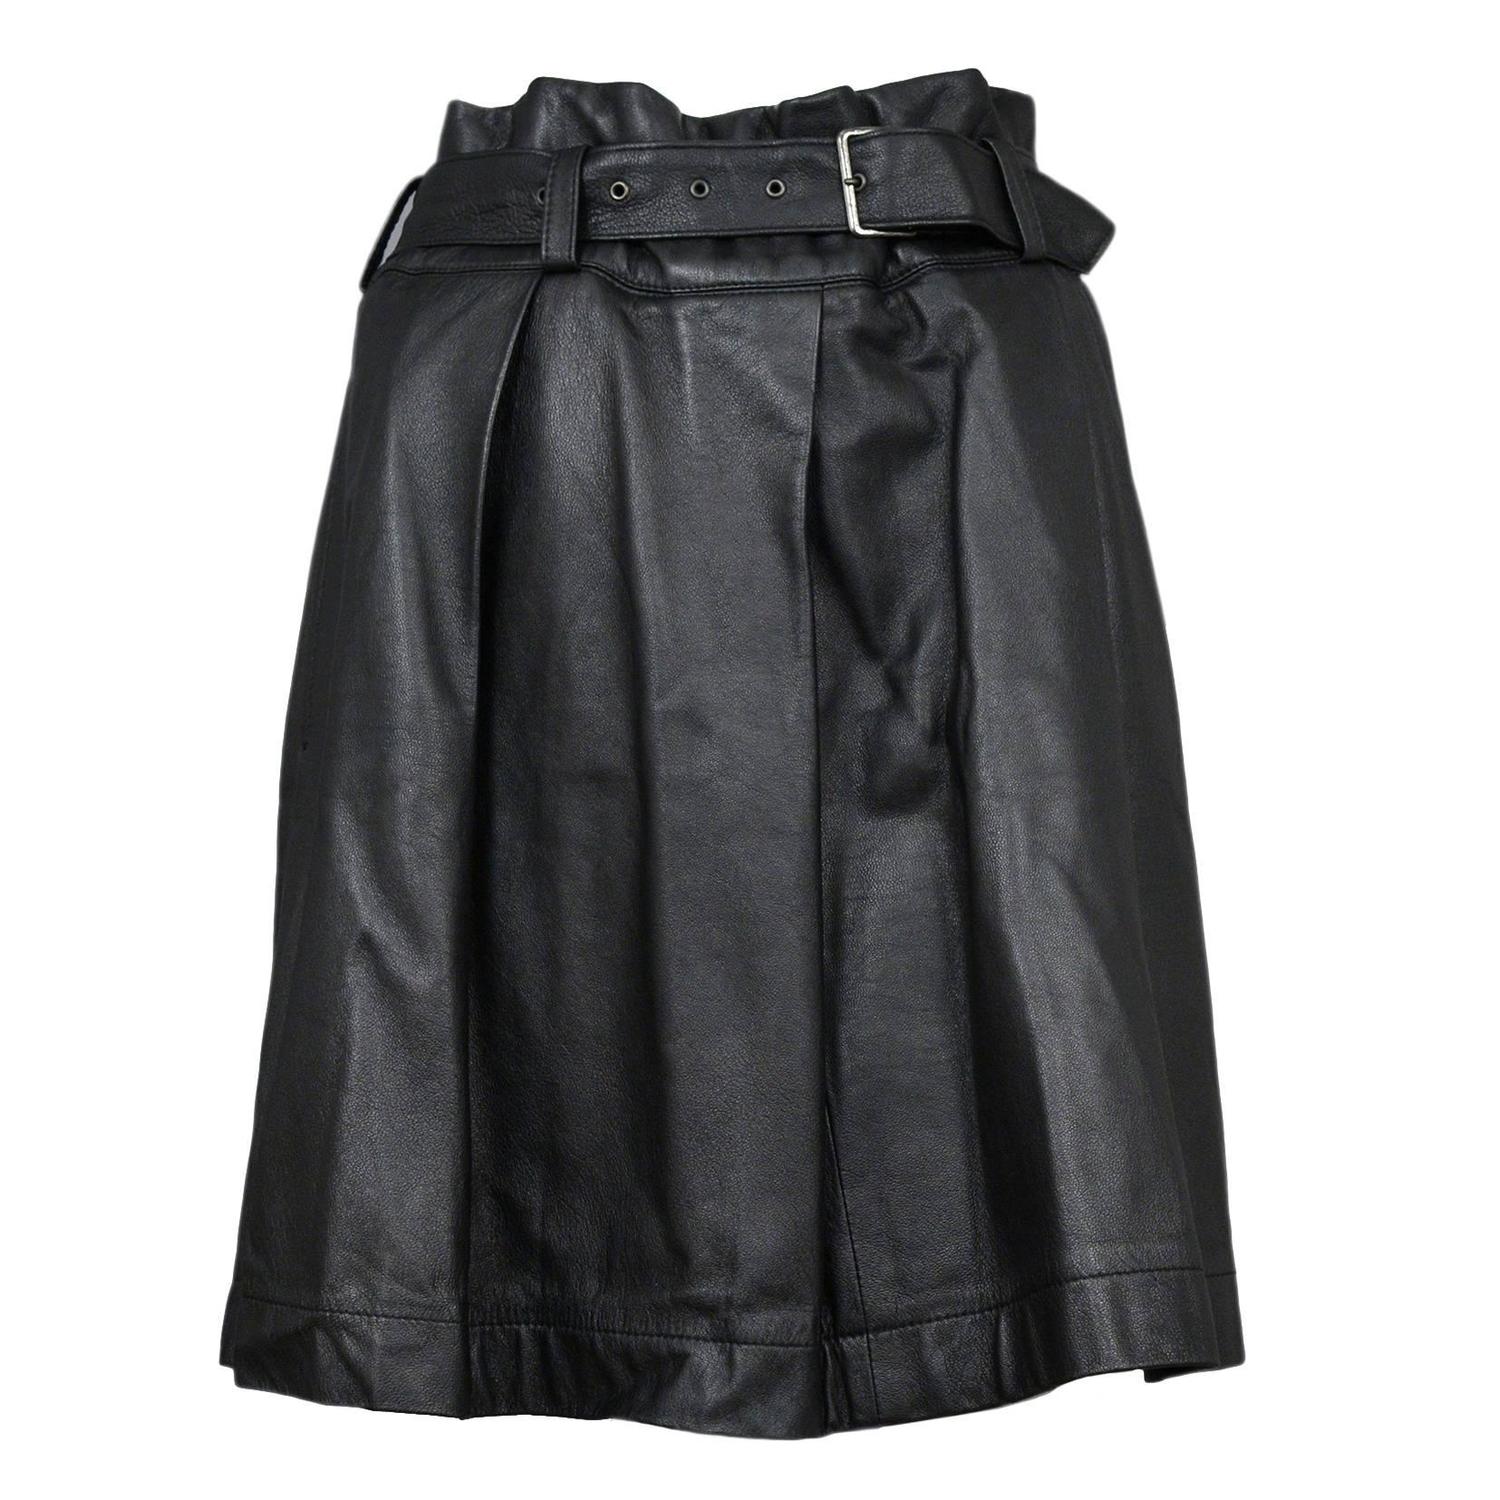 Black Belted Skirt 19